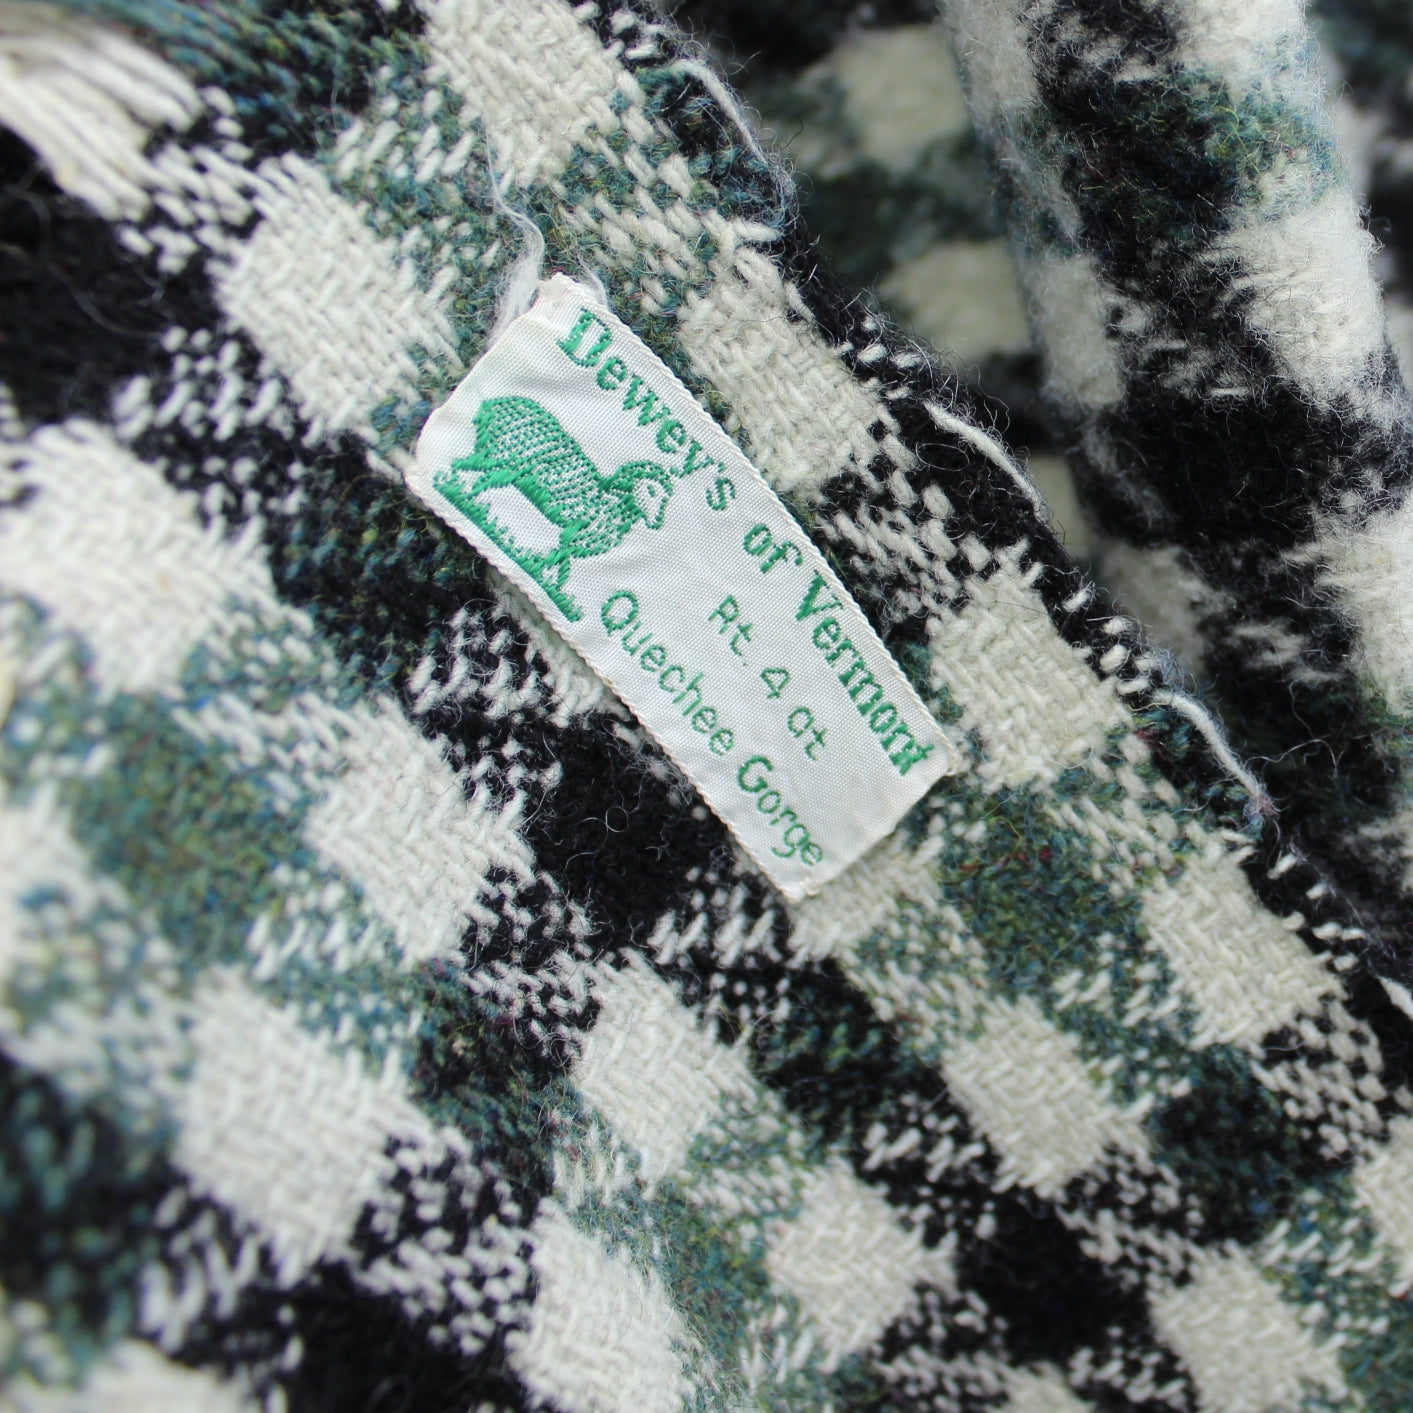 Rare Dewey's of Vermont Soft Wool Throw Handsome Teal & Black Plaid Vintage Pre 1972 original tag from dewey's vermont